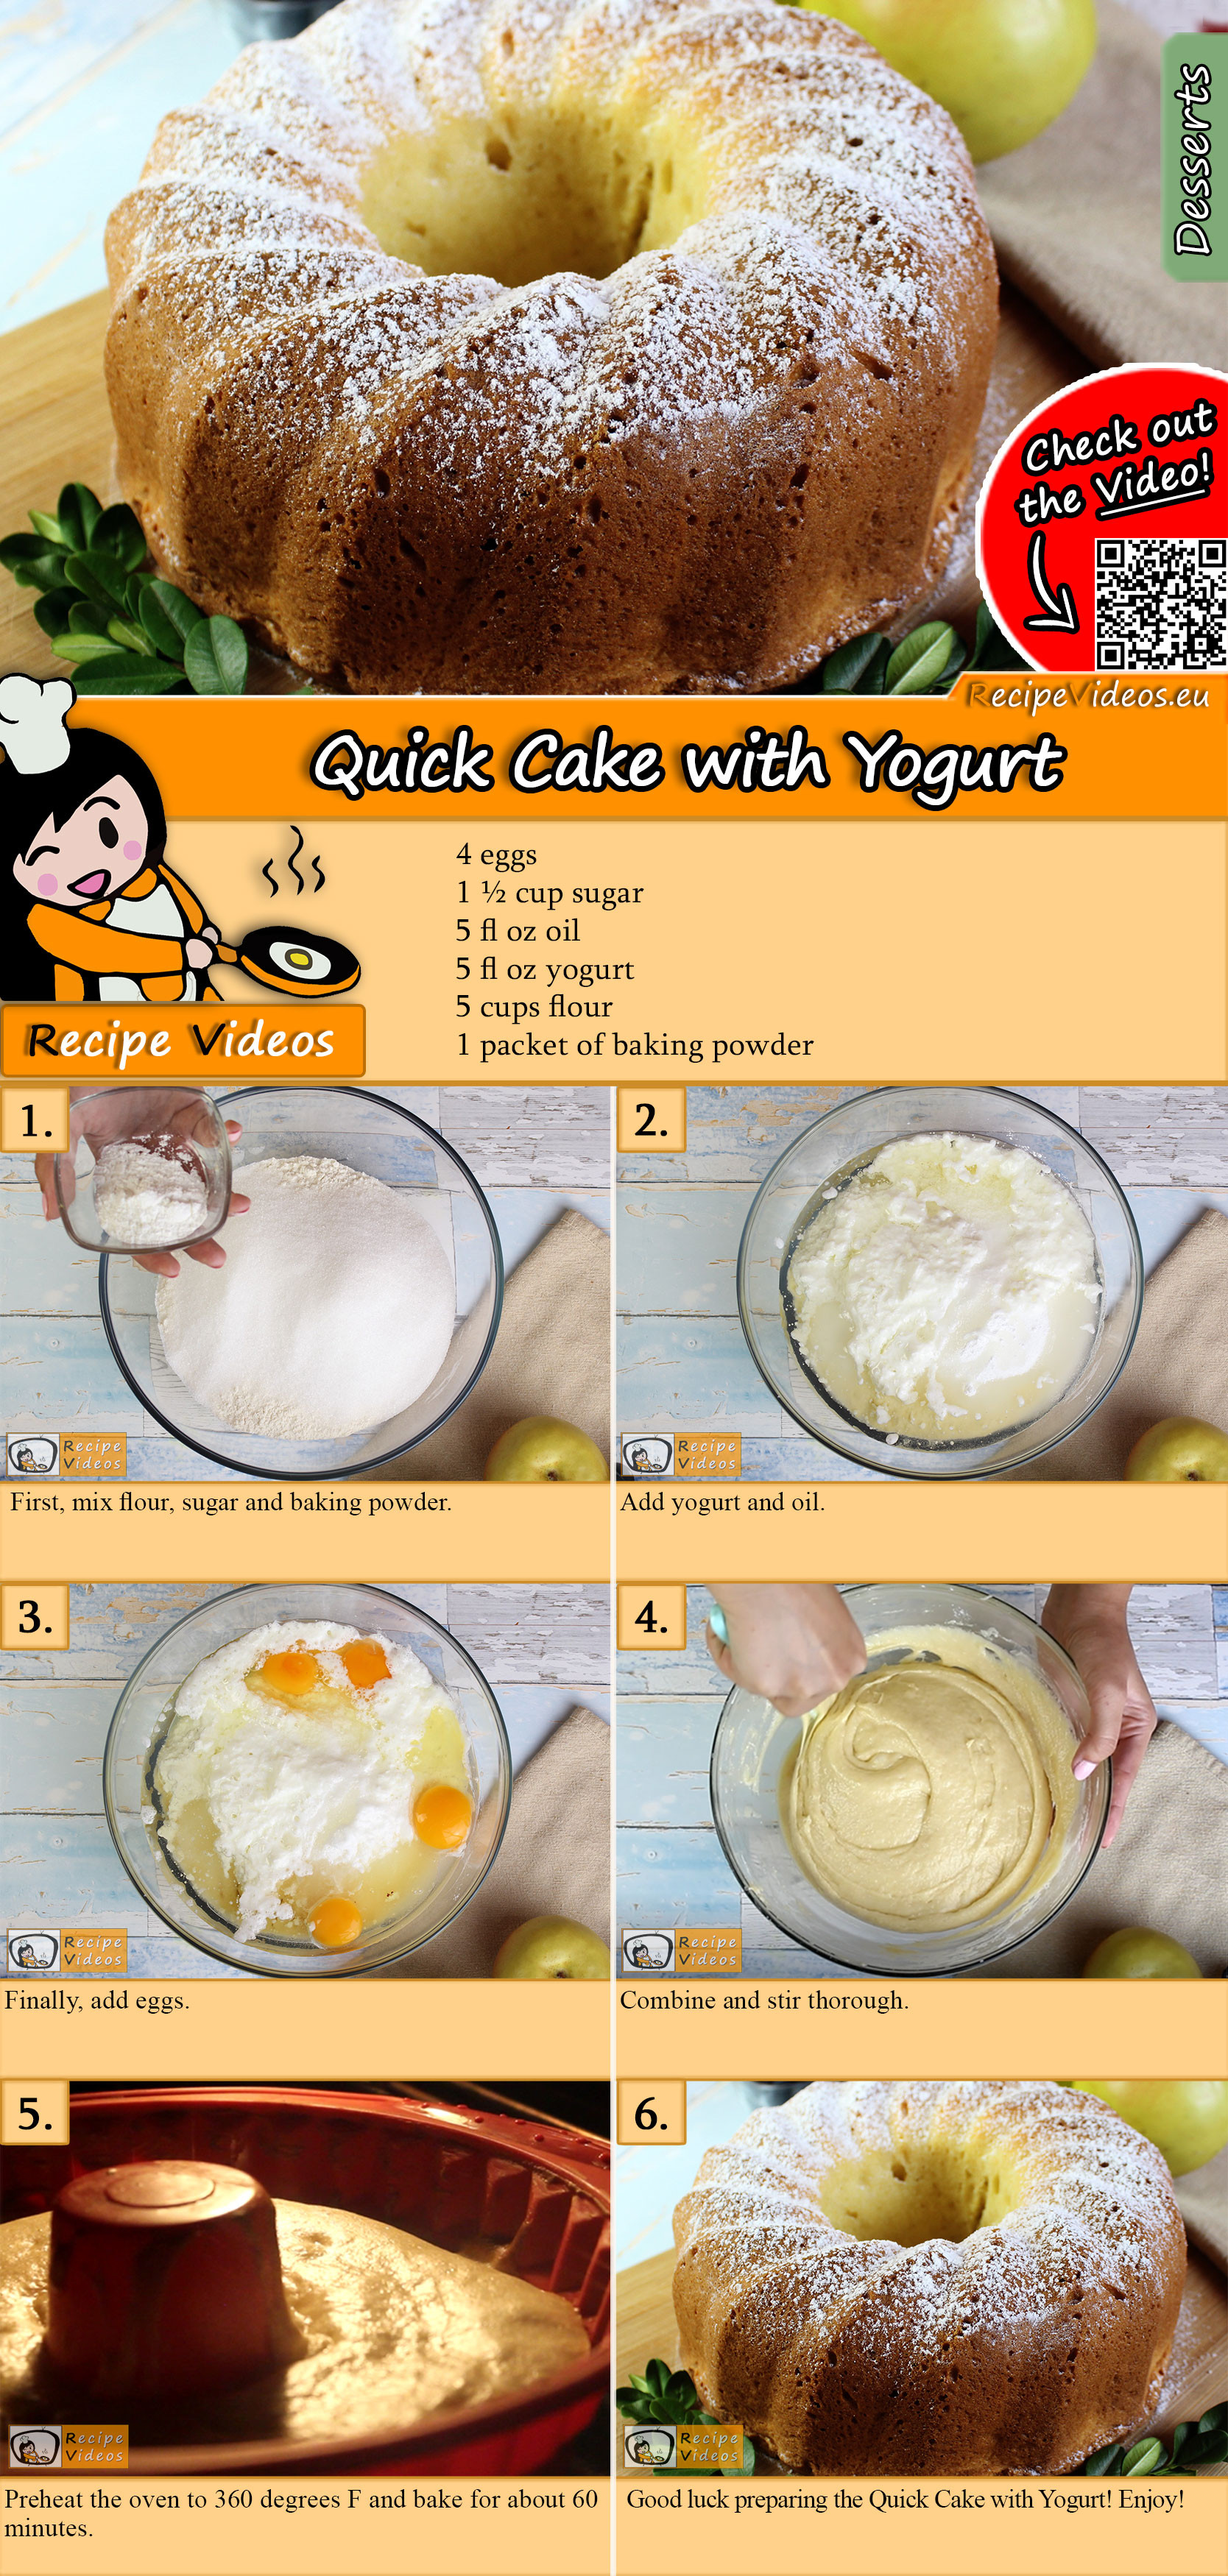 Quick Cake with Yogurt recipe with video